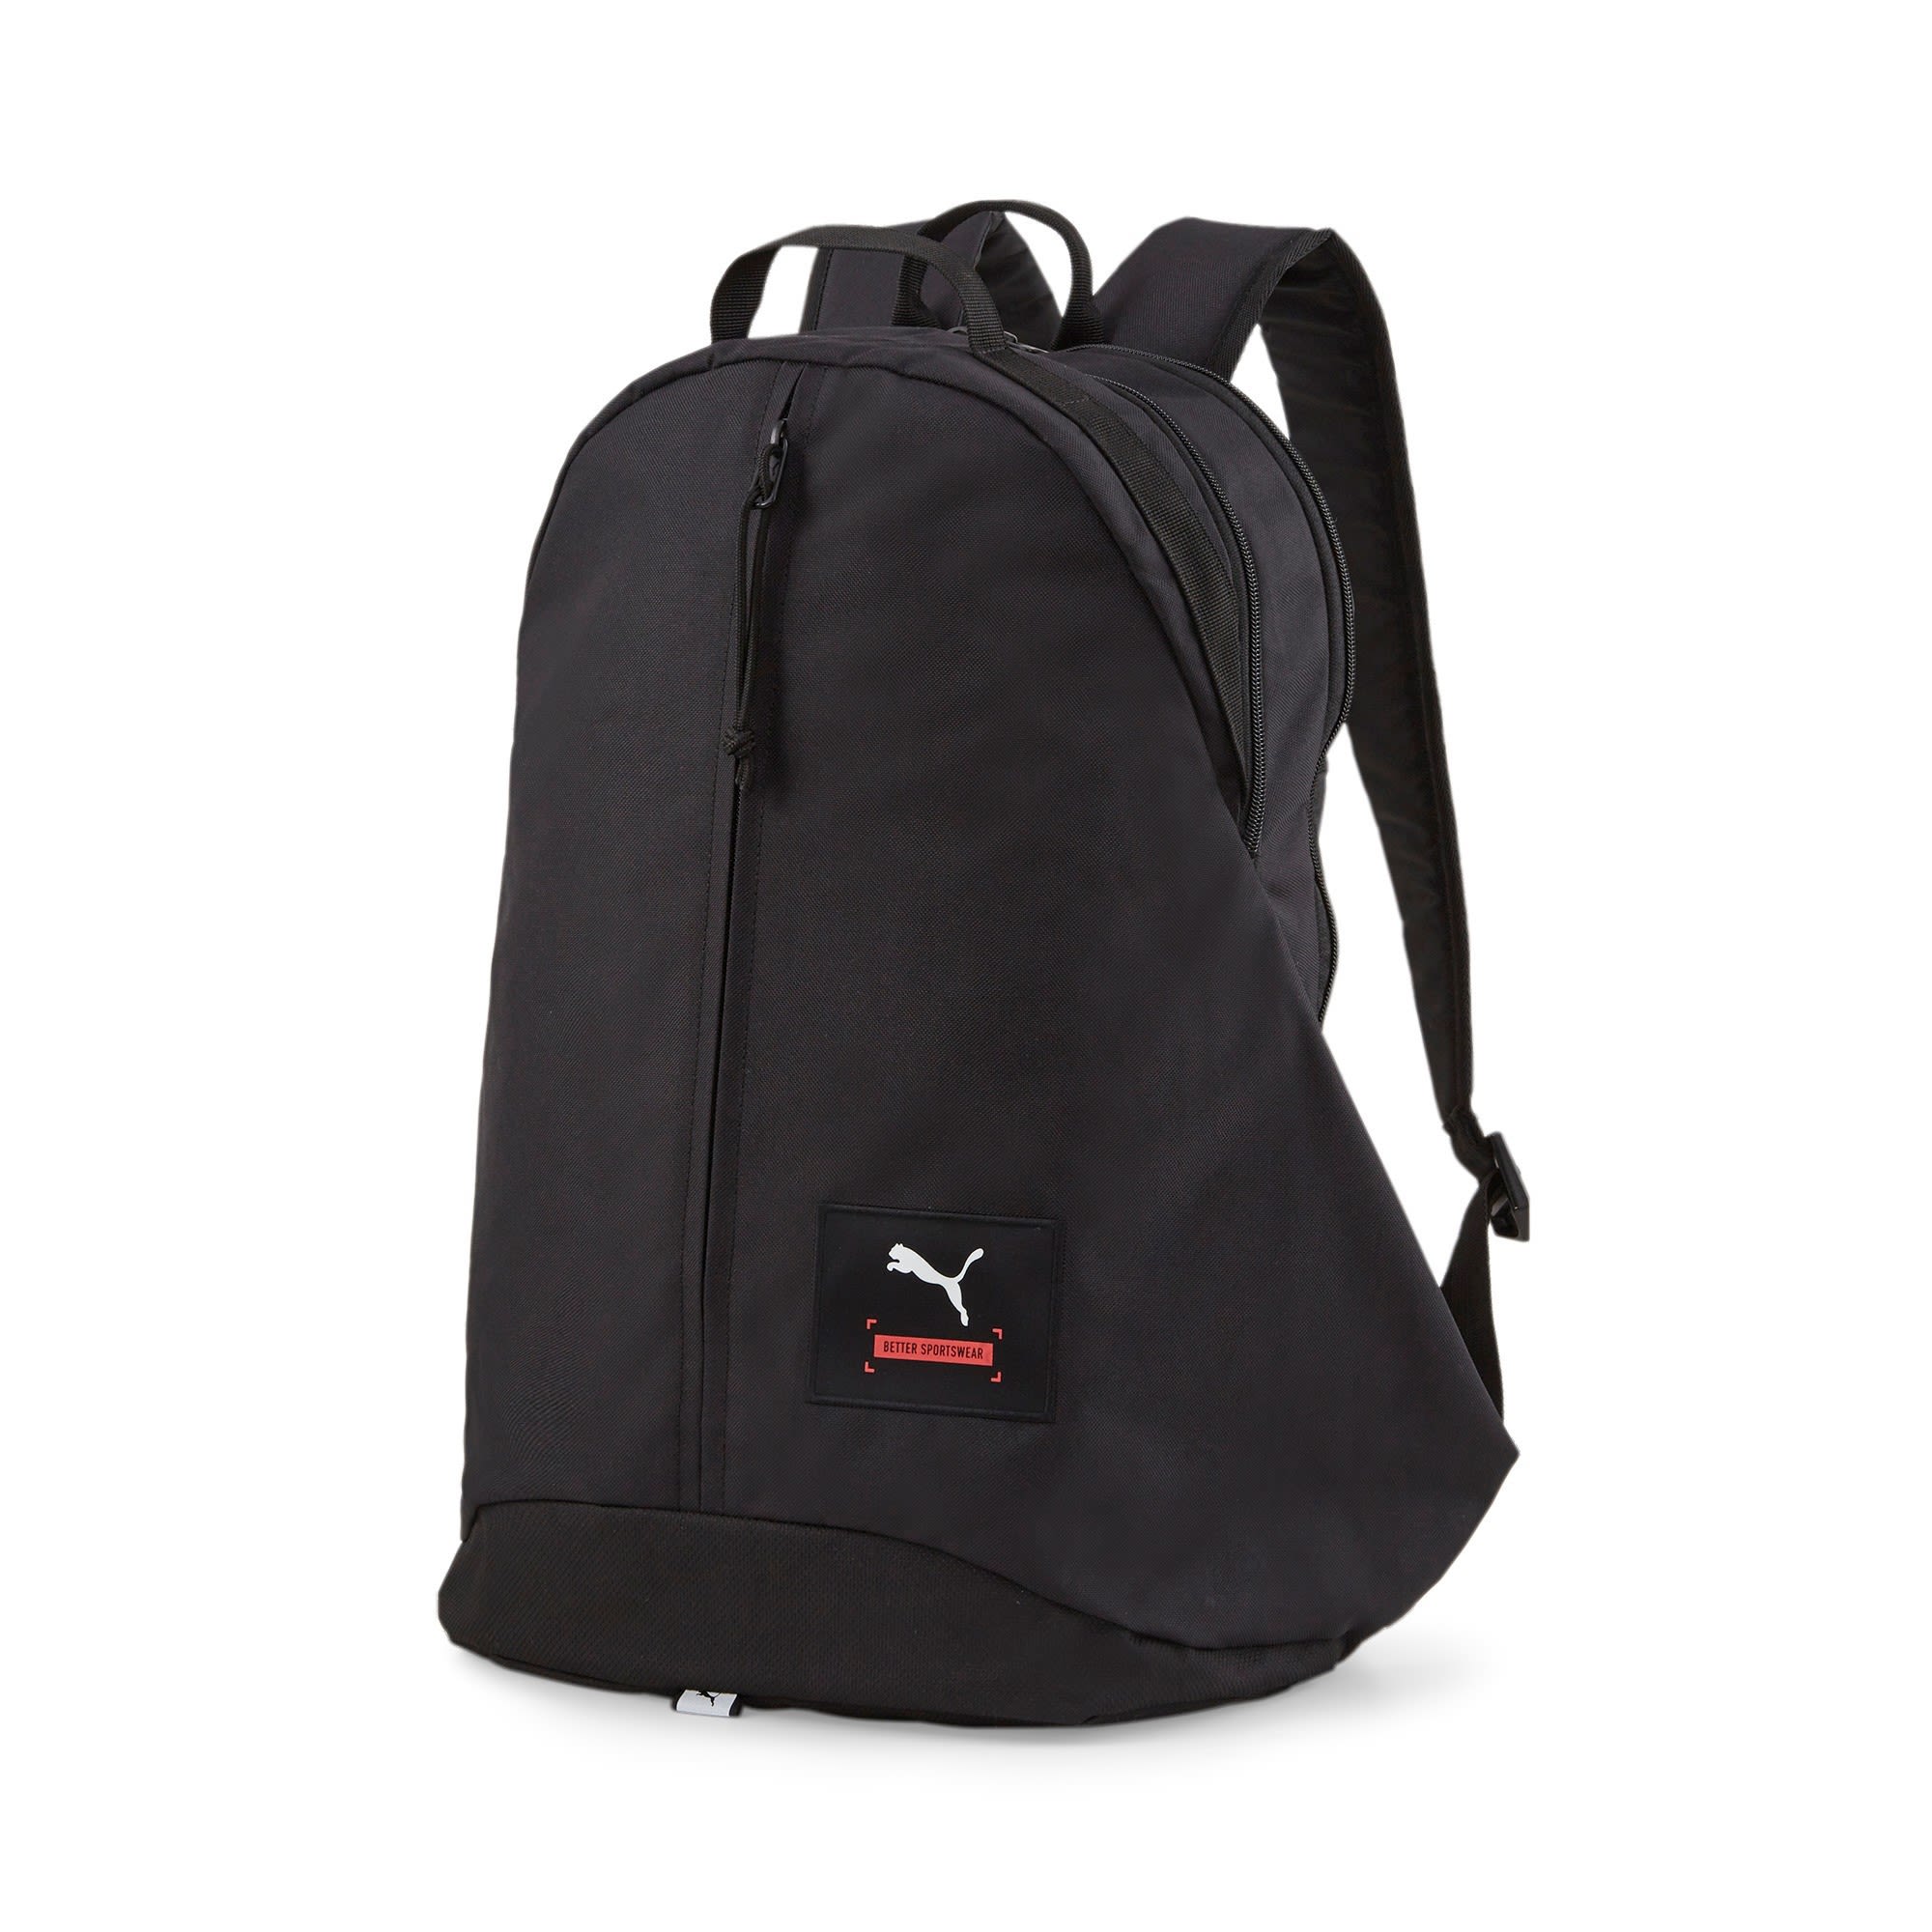 Puma Better Backpack Schwarz- Daypacks- Grsse One Size - Farbe Puma Black